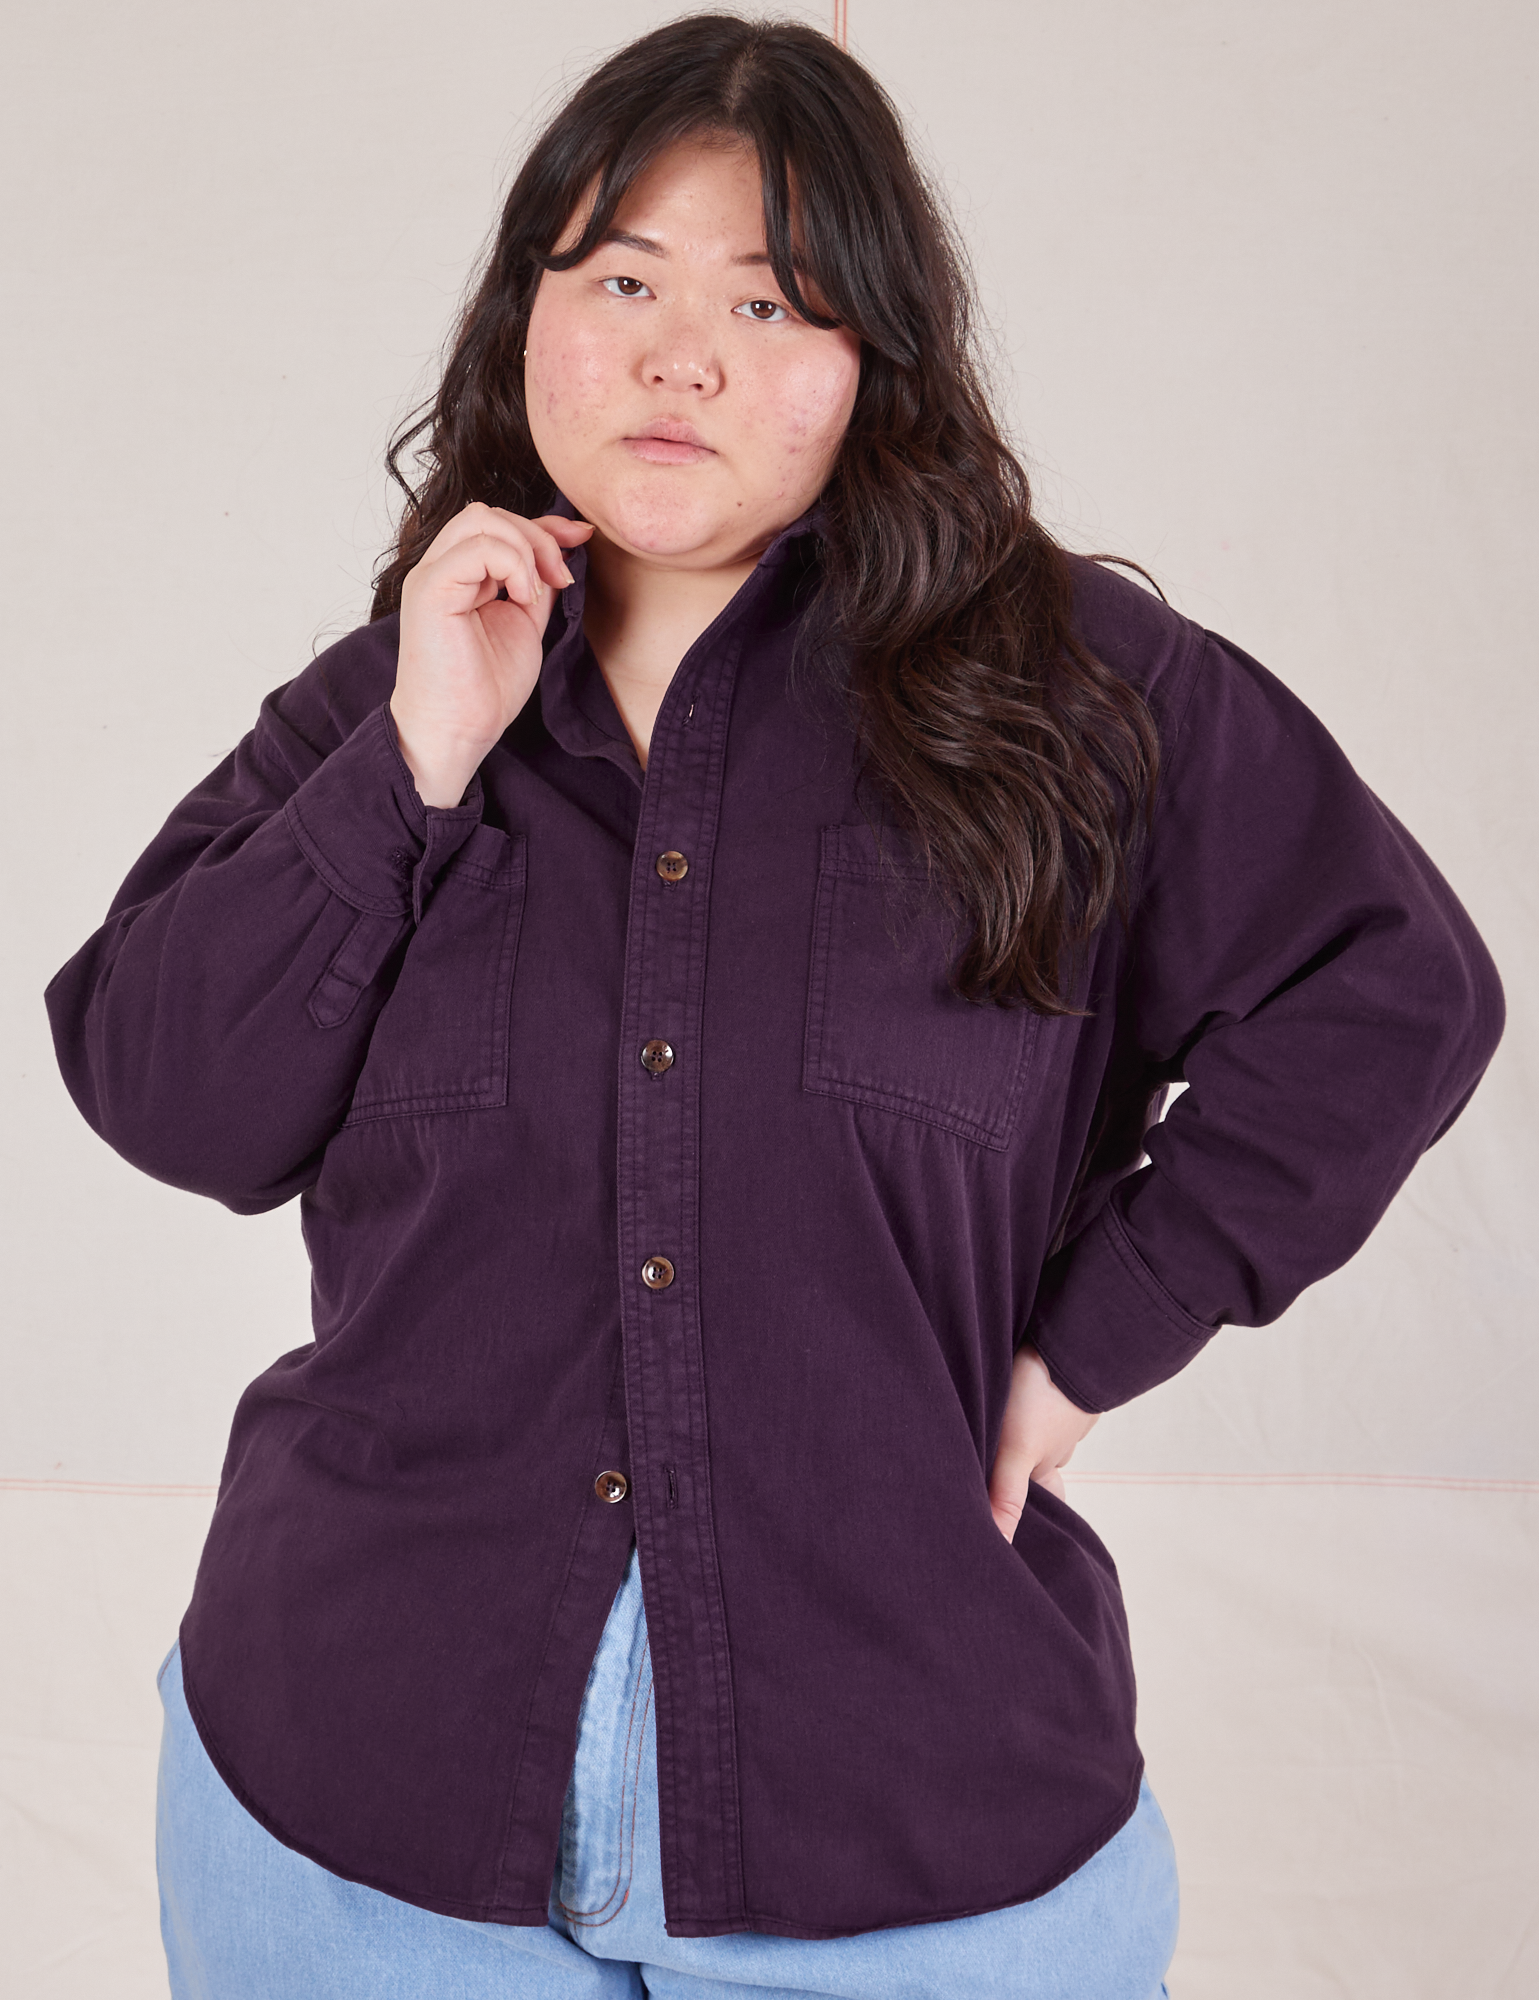 Ashley is wearing Oversize Overshirt in Nebula Purple